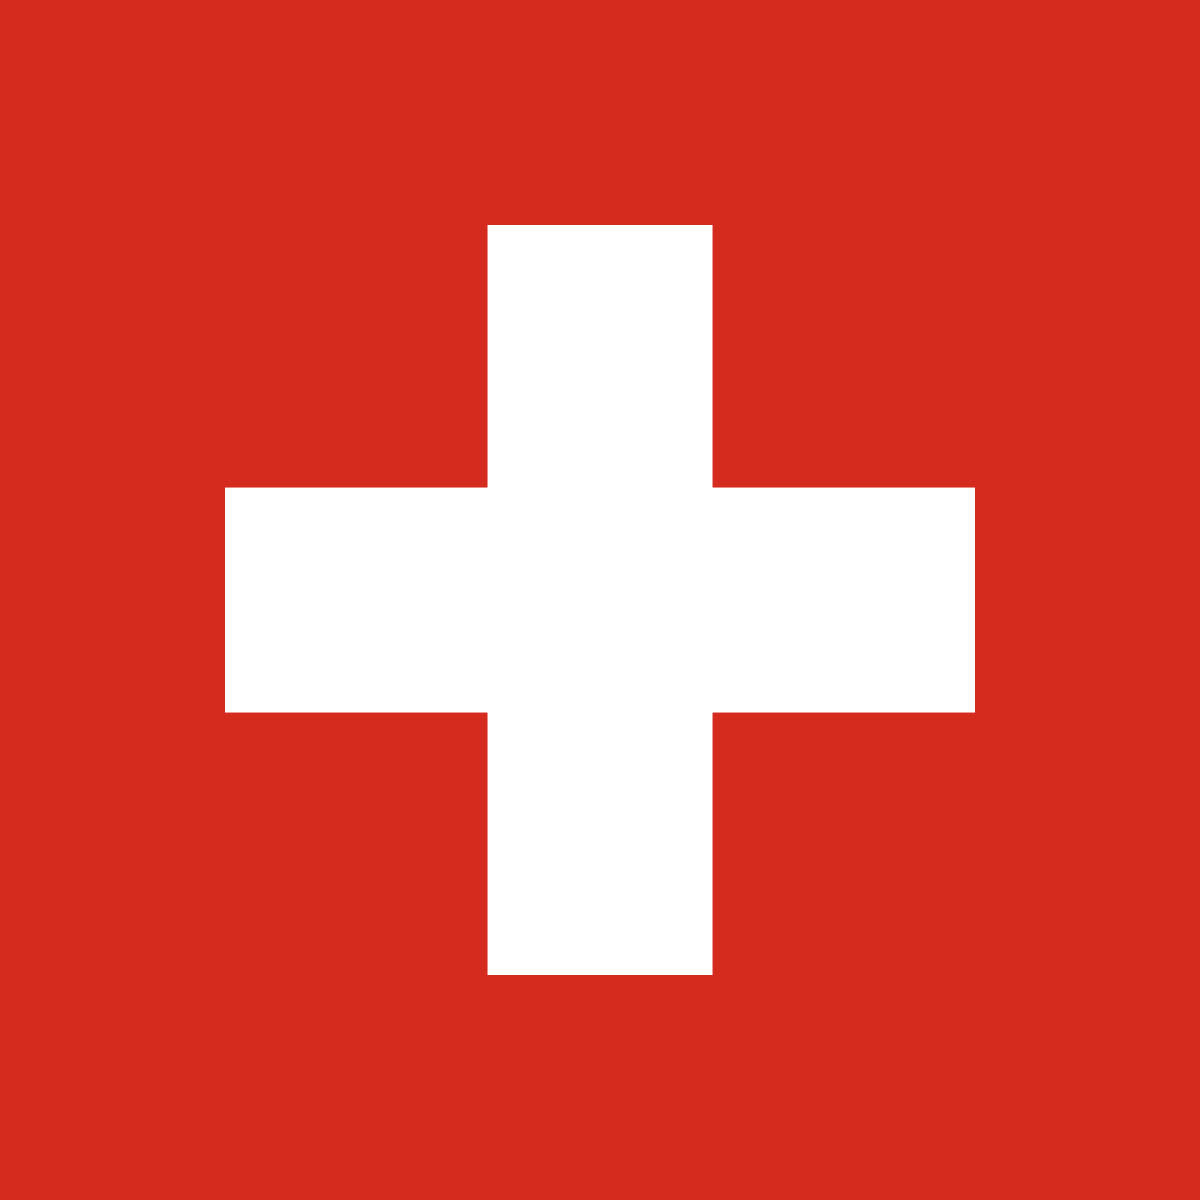 Red Block with White Cross Logo - Flag of Switzerland